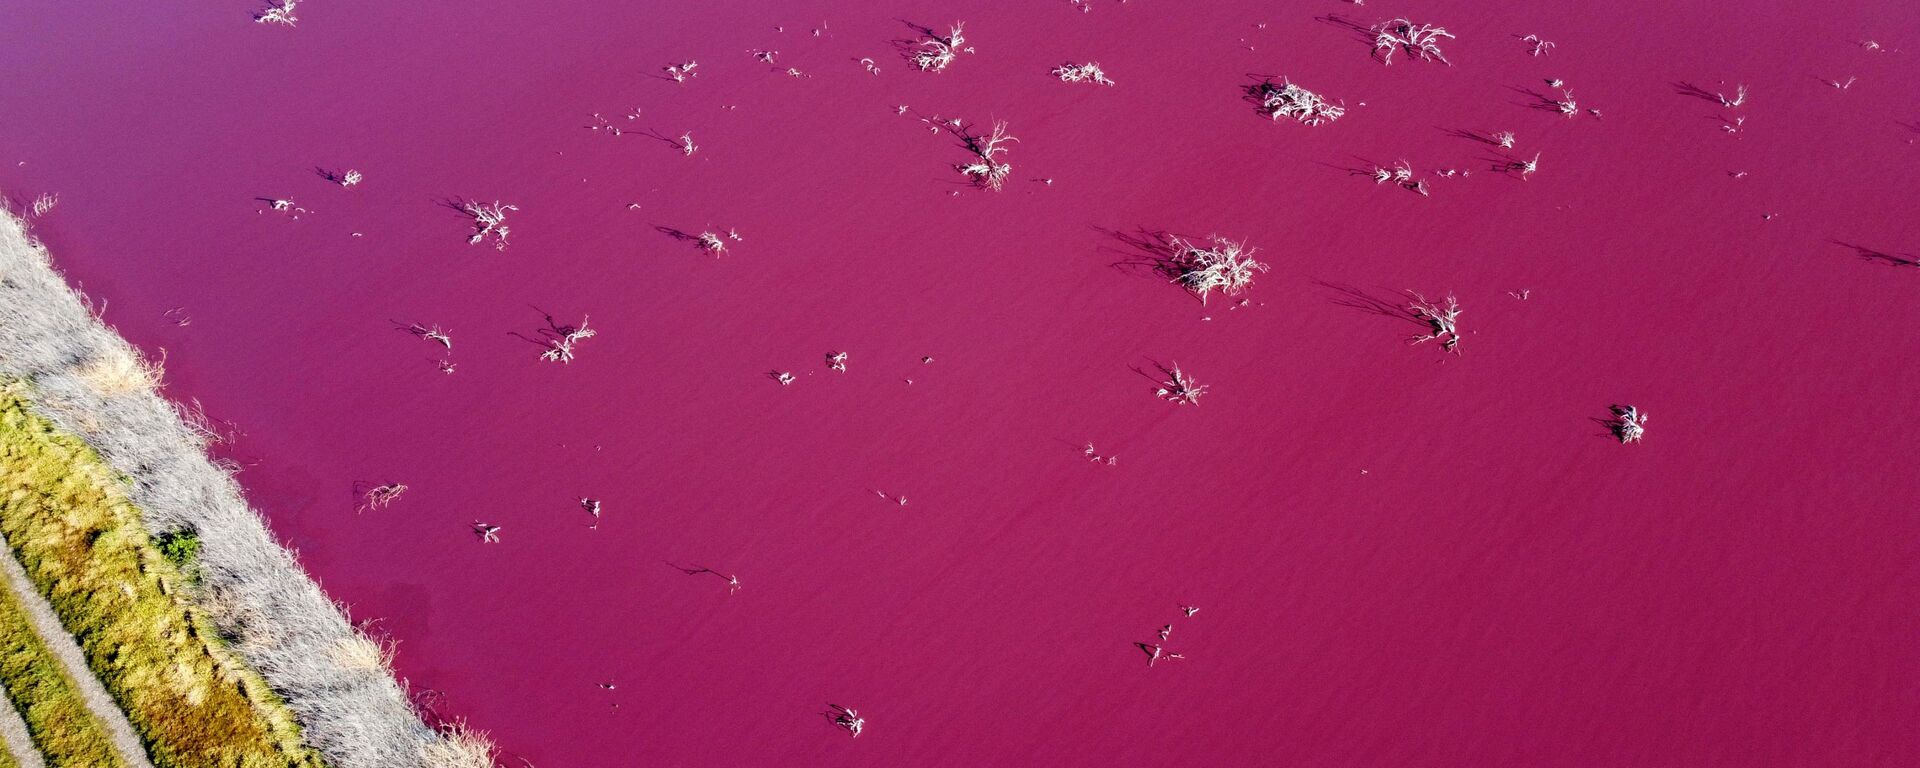 Una laguna en la Patagonia teñida de rosa - Sputnik Mundo, 1920, 27.07.2021